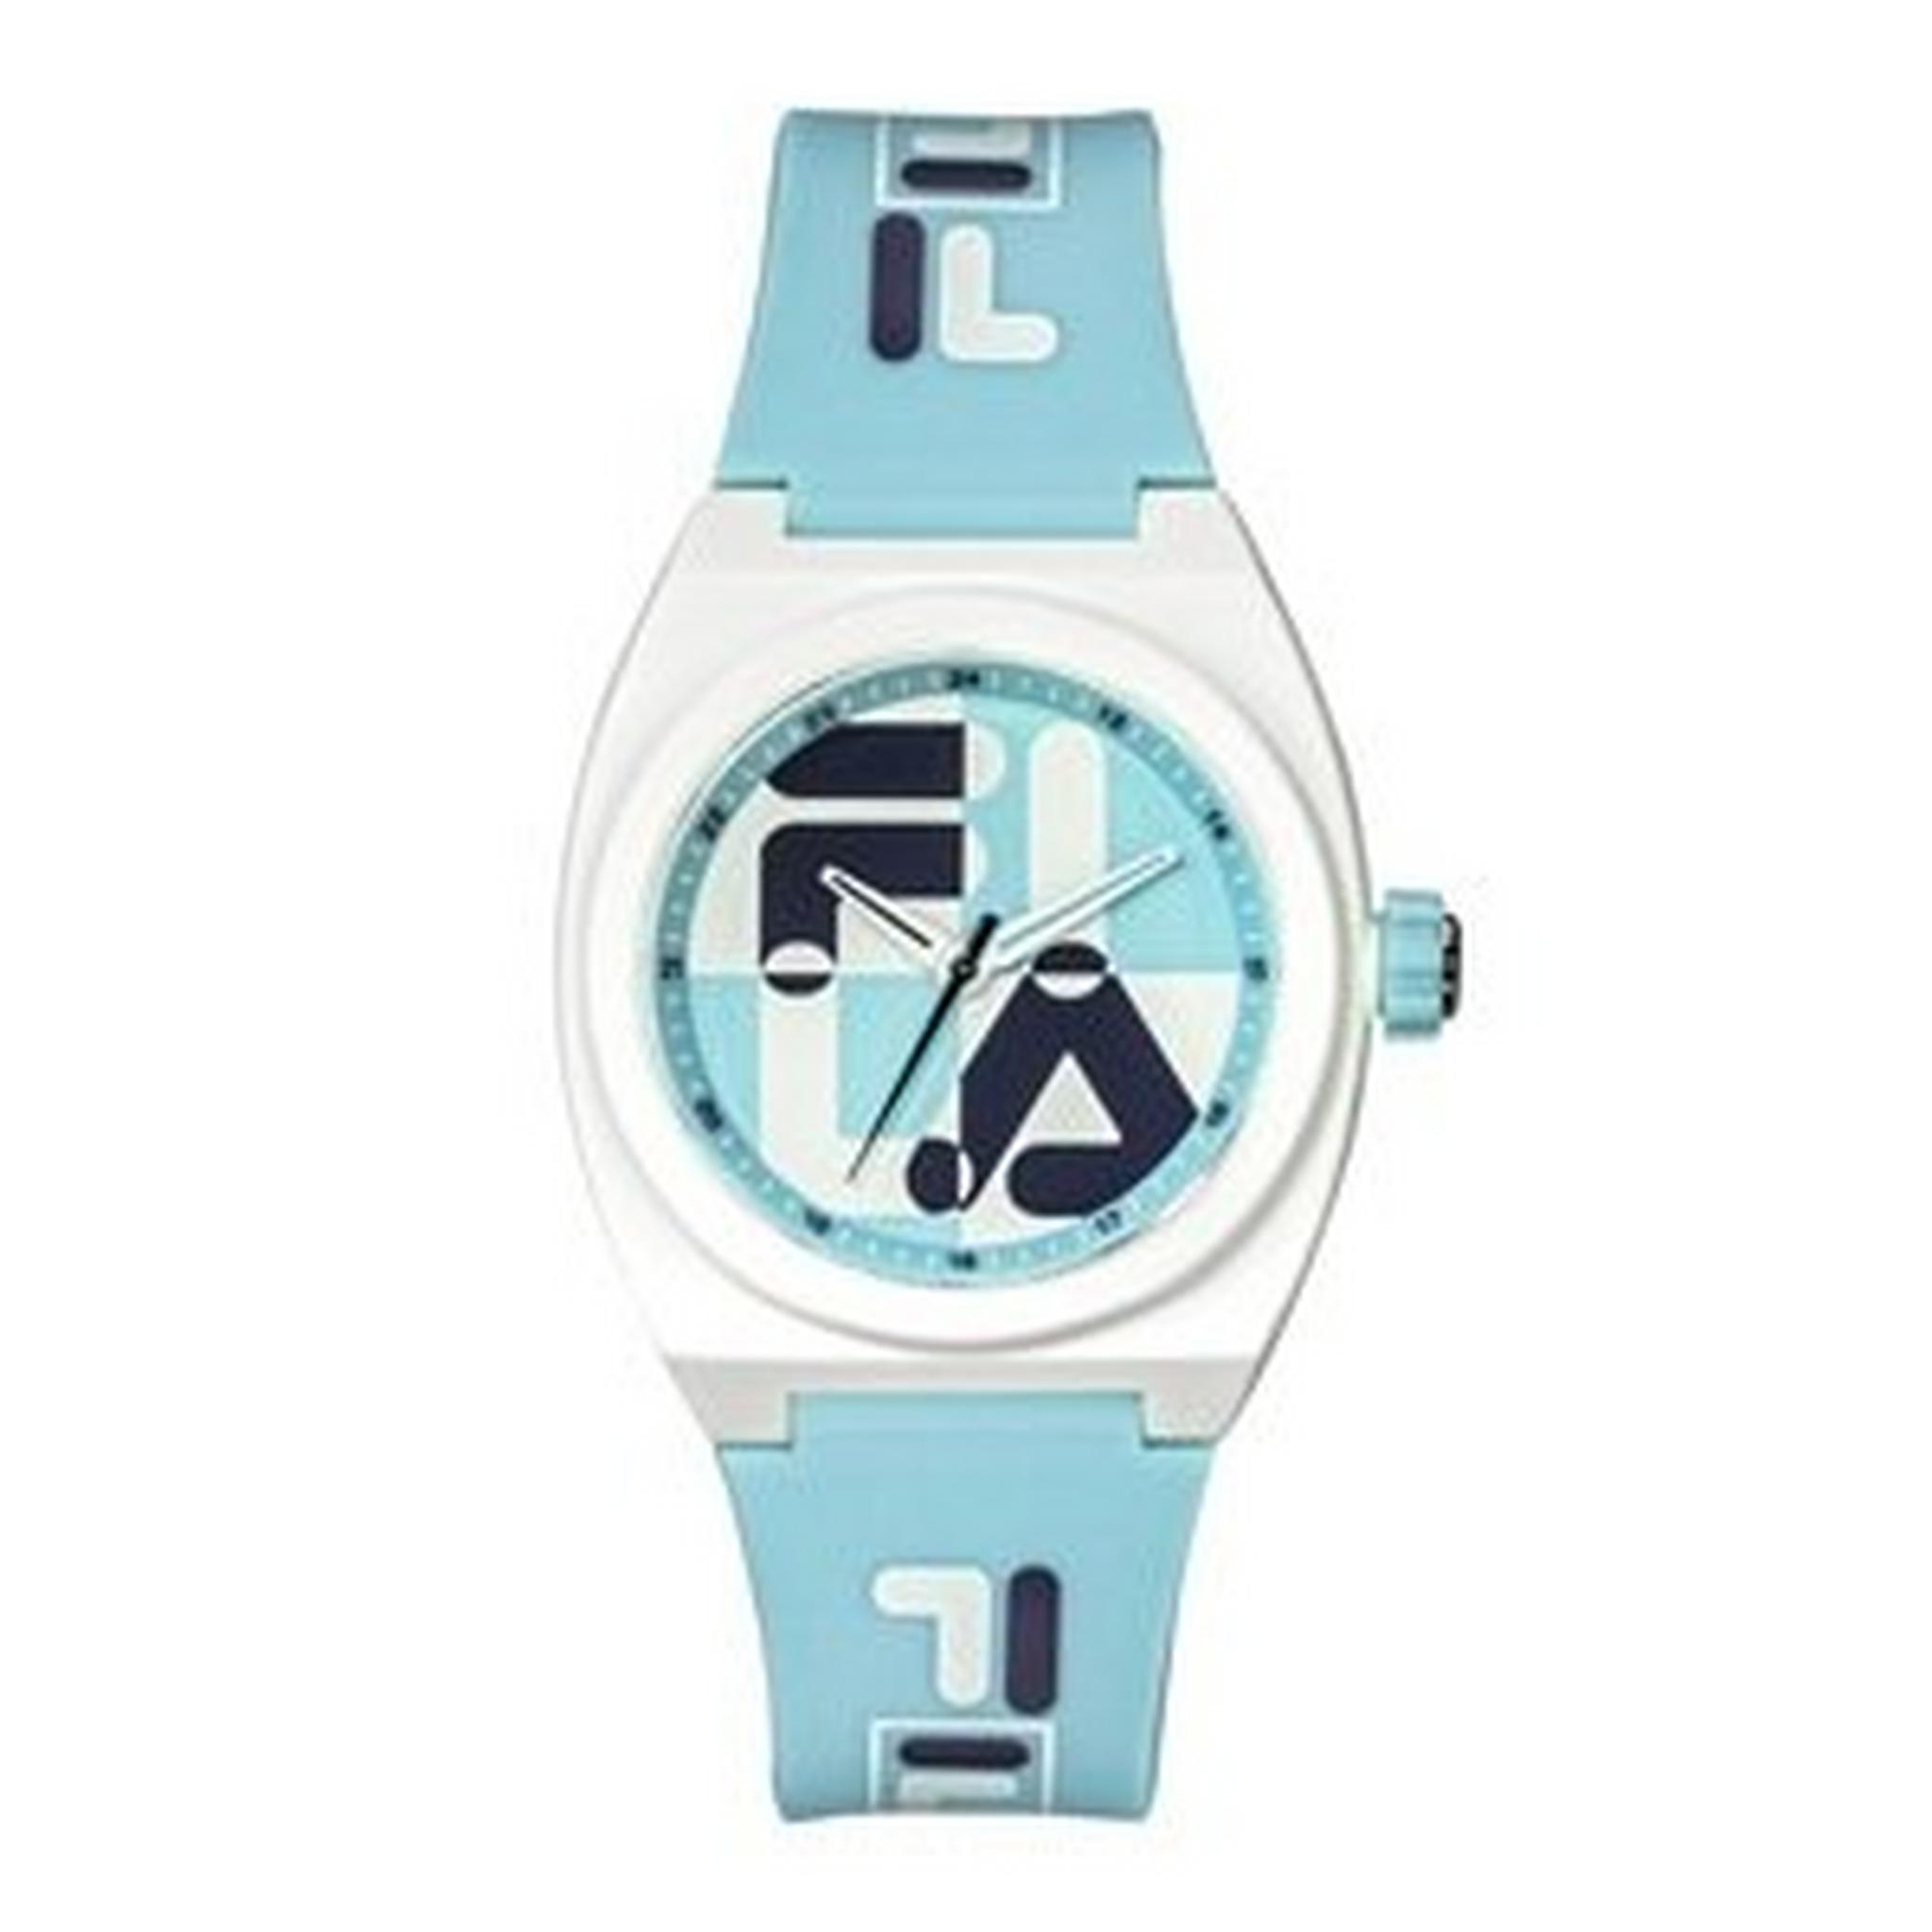 Fila 42mm Ladies Analogue Rubber Fashion Watch (38180105) - Blue/White